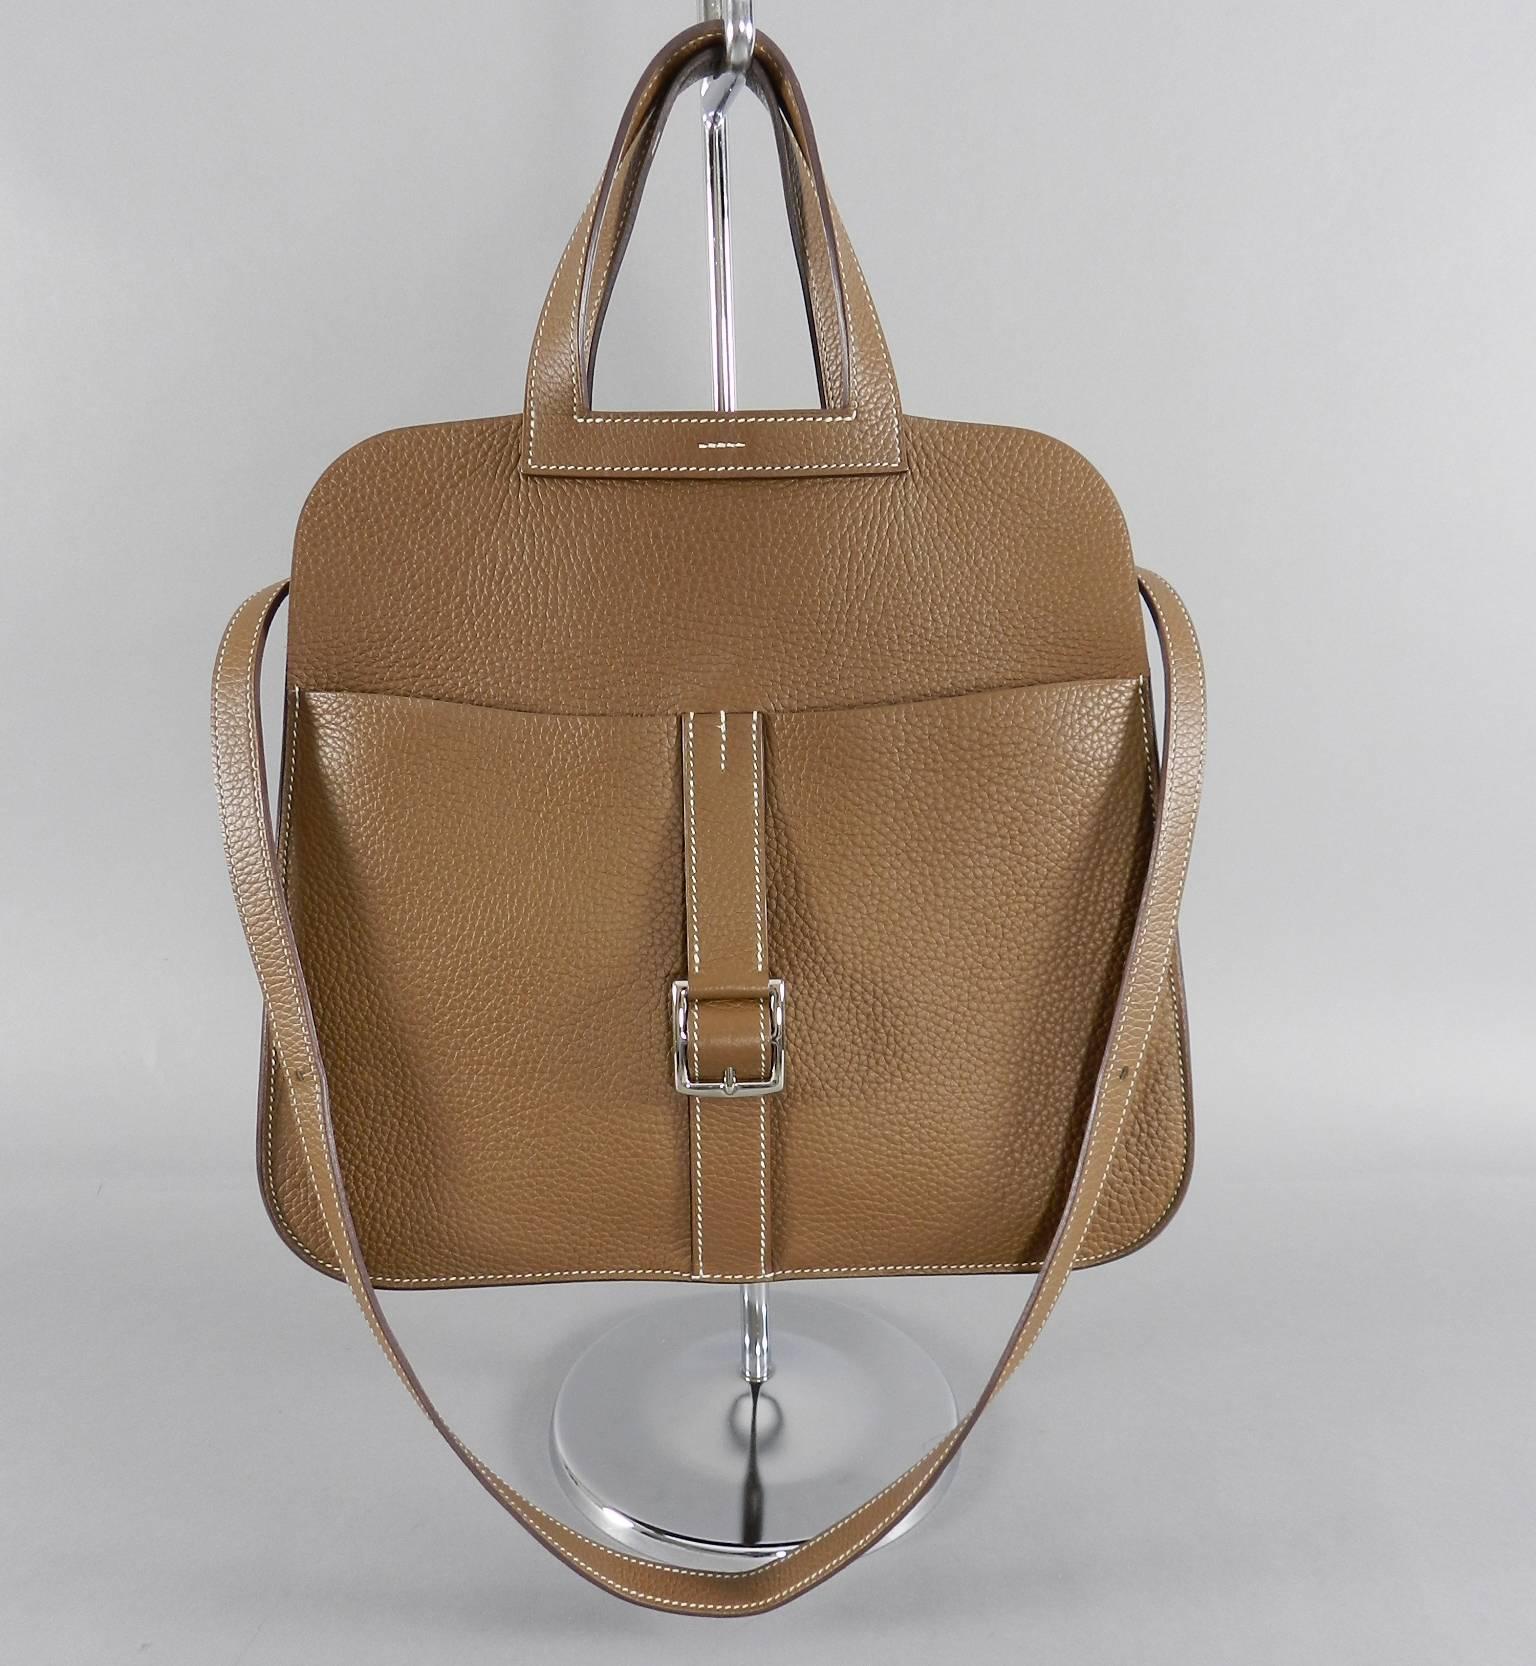 Hermes Halzan Bag - 31 cm in Taurillon Clemence leather in Alezan color and palladium hardware. Fall 2014 runway season bag. Body of bag measures 12 x 8 x 4